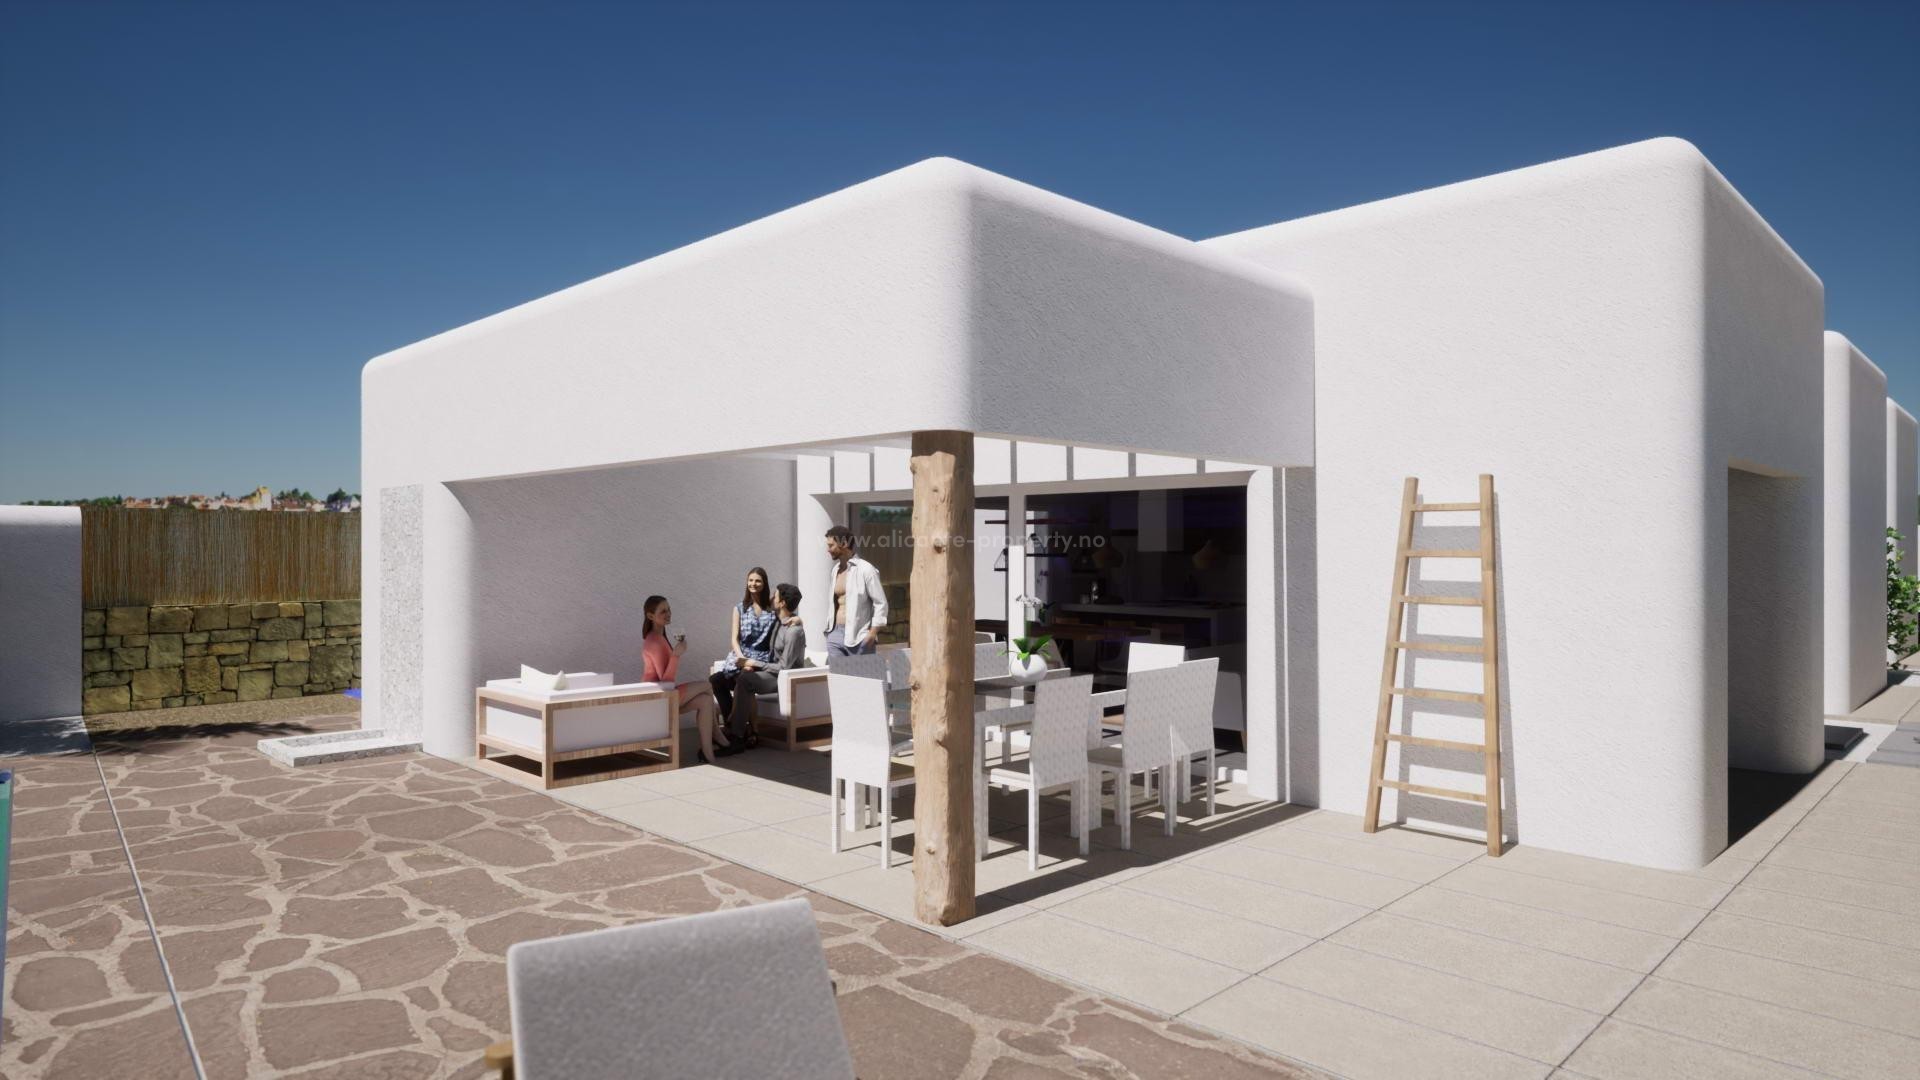 Fantastic new built Ibiza style villas in Alfaz del Pi, 3 bedrooms, 2 bathrooms, nice pool and terrace